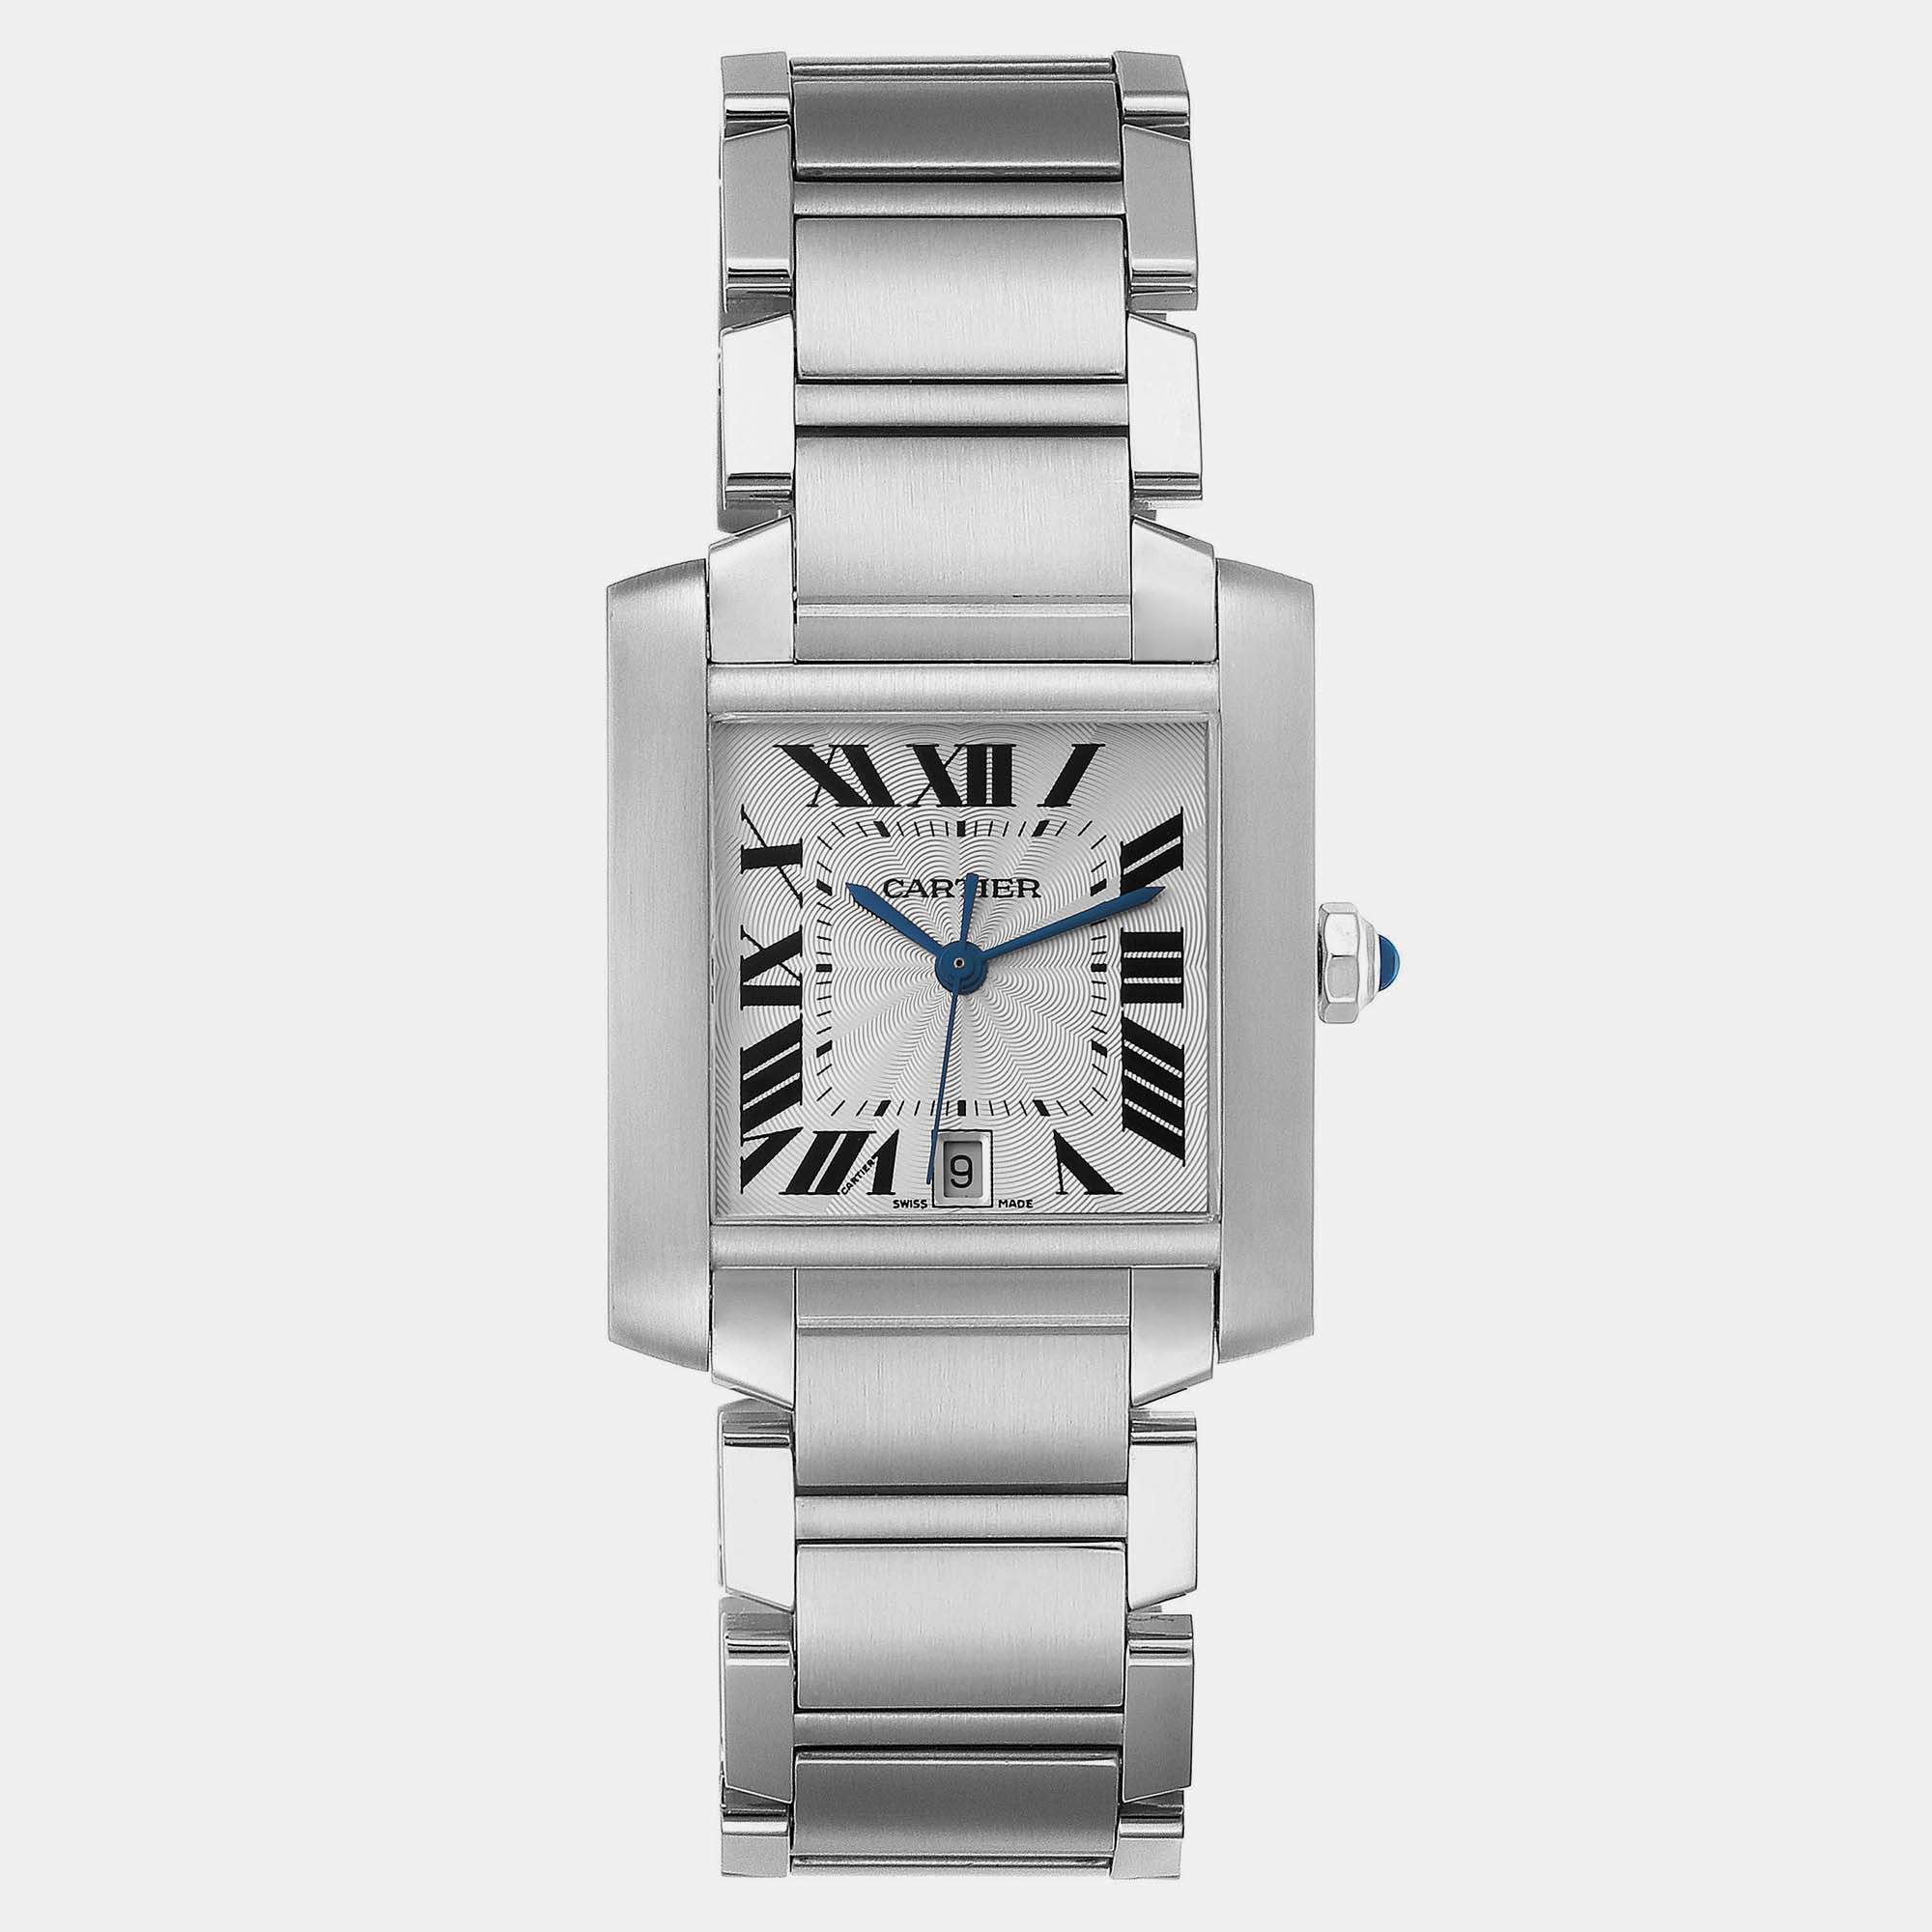 Cartier Tank Francaise Large Automatic Steel Men's Watch W51002Q3 28 x 32 mm